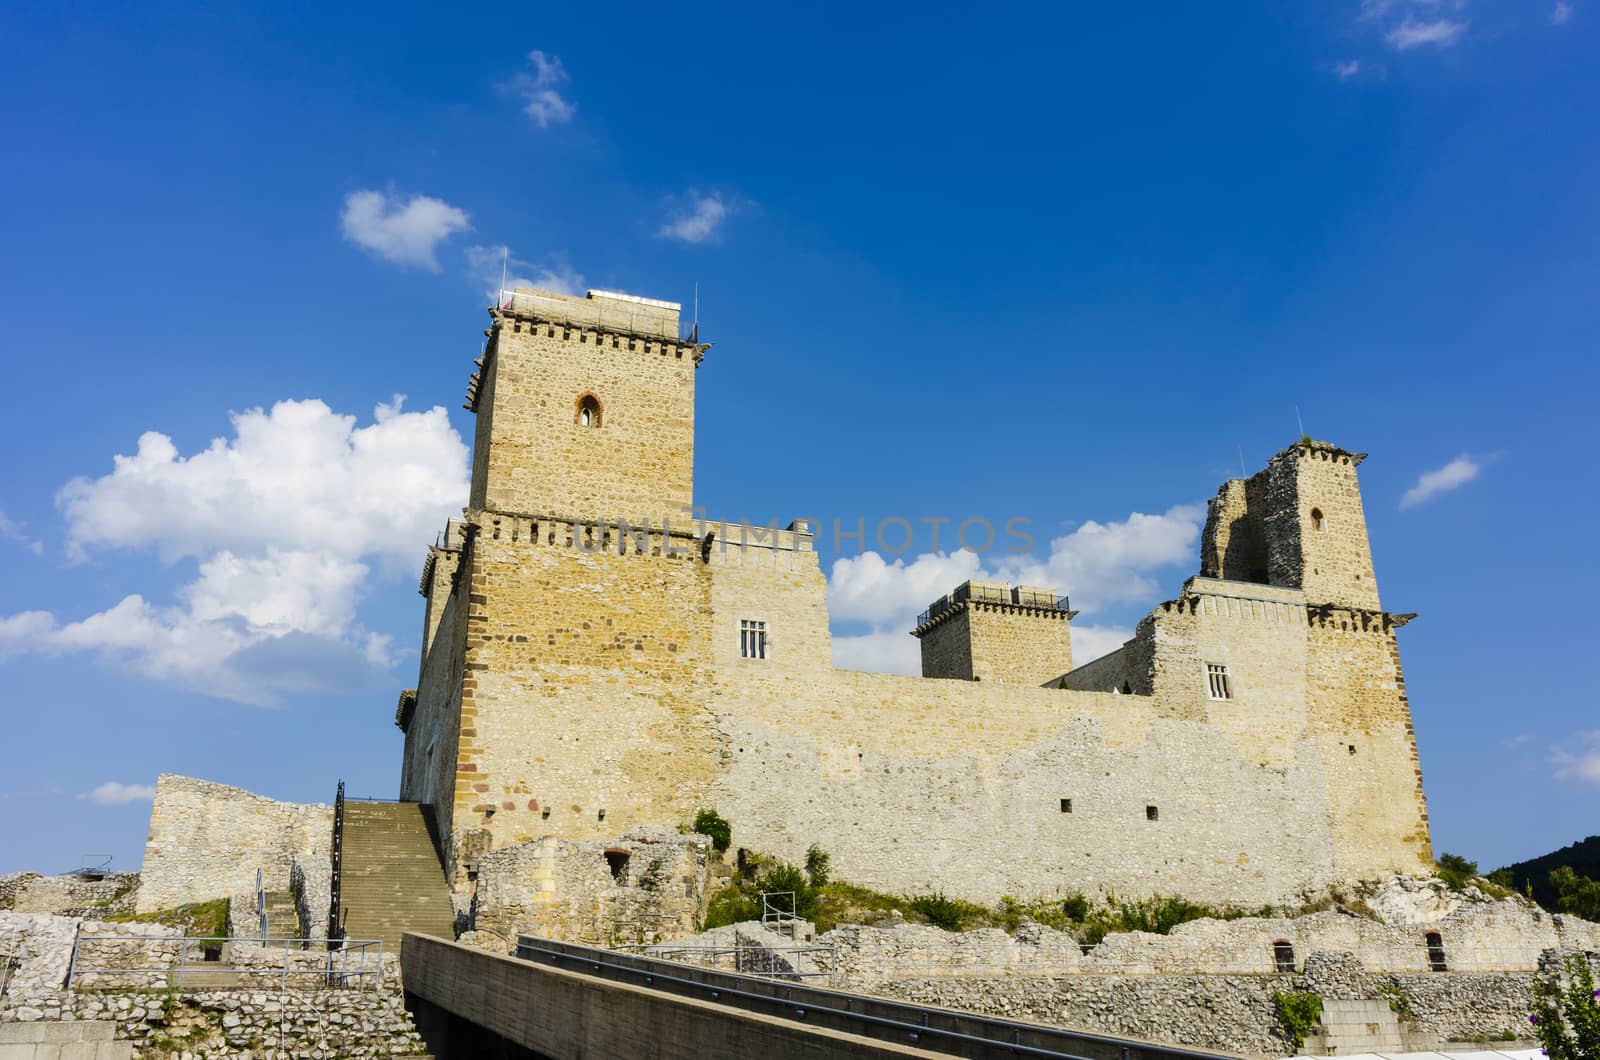 Diosgyor castle of Miskolc by fyletto